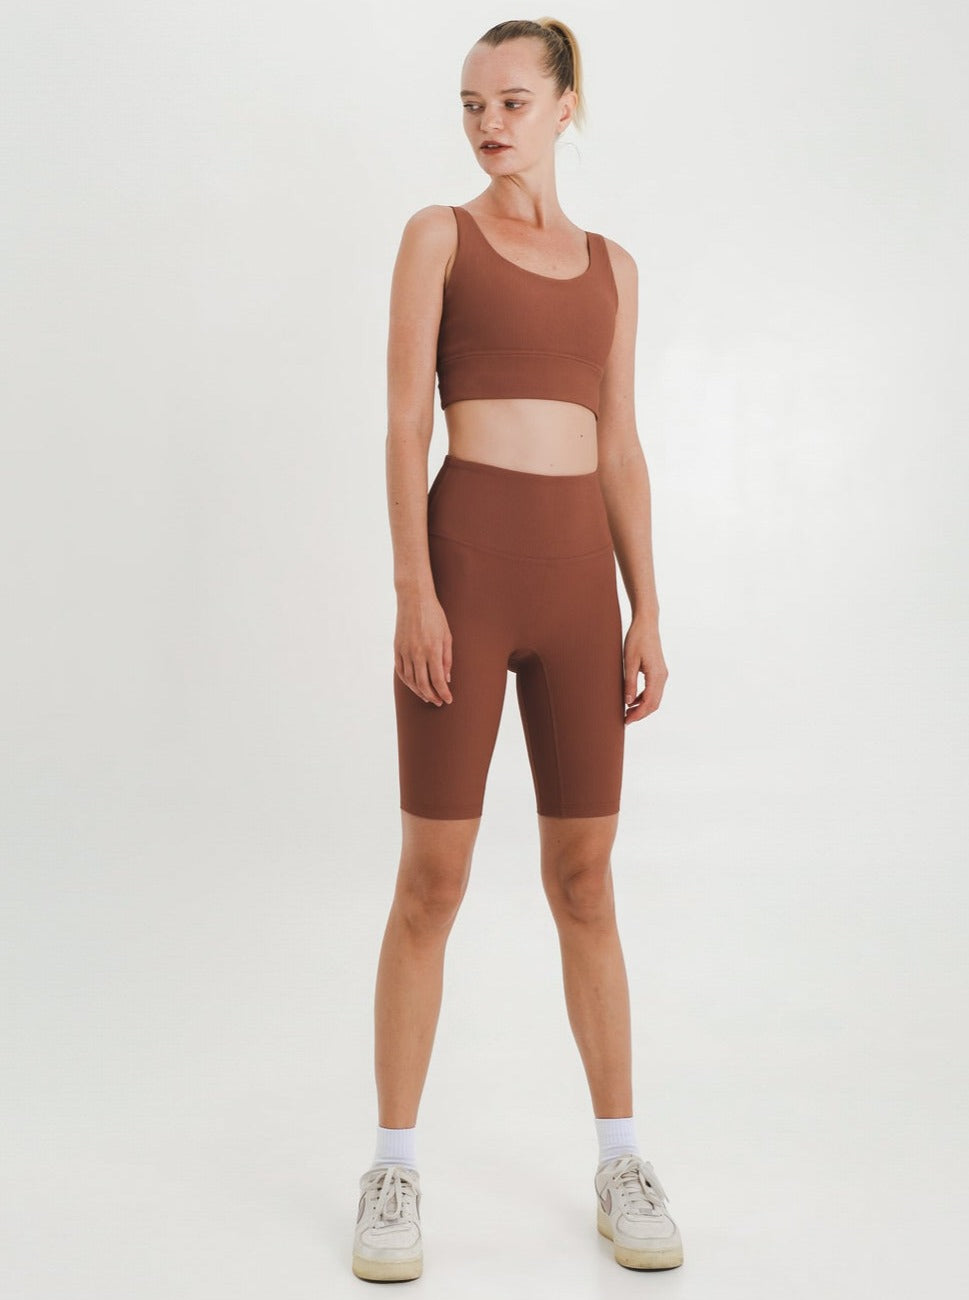 Mudra Knit Bike Shorts in Copper (XS & S LEFT)